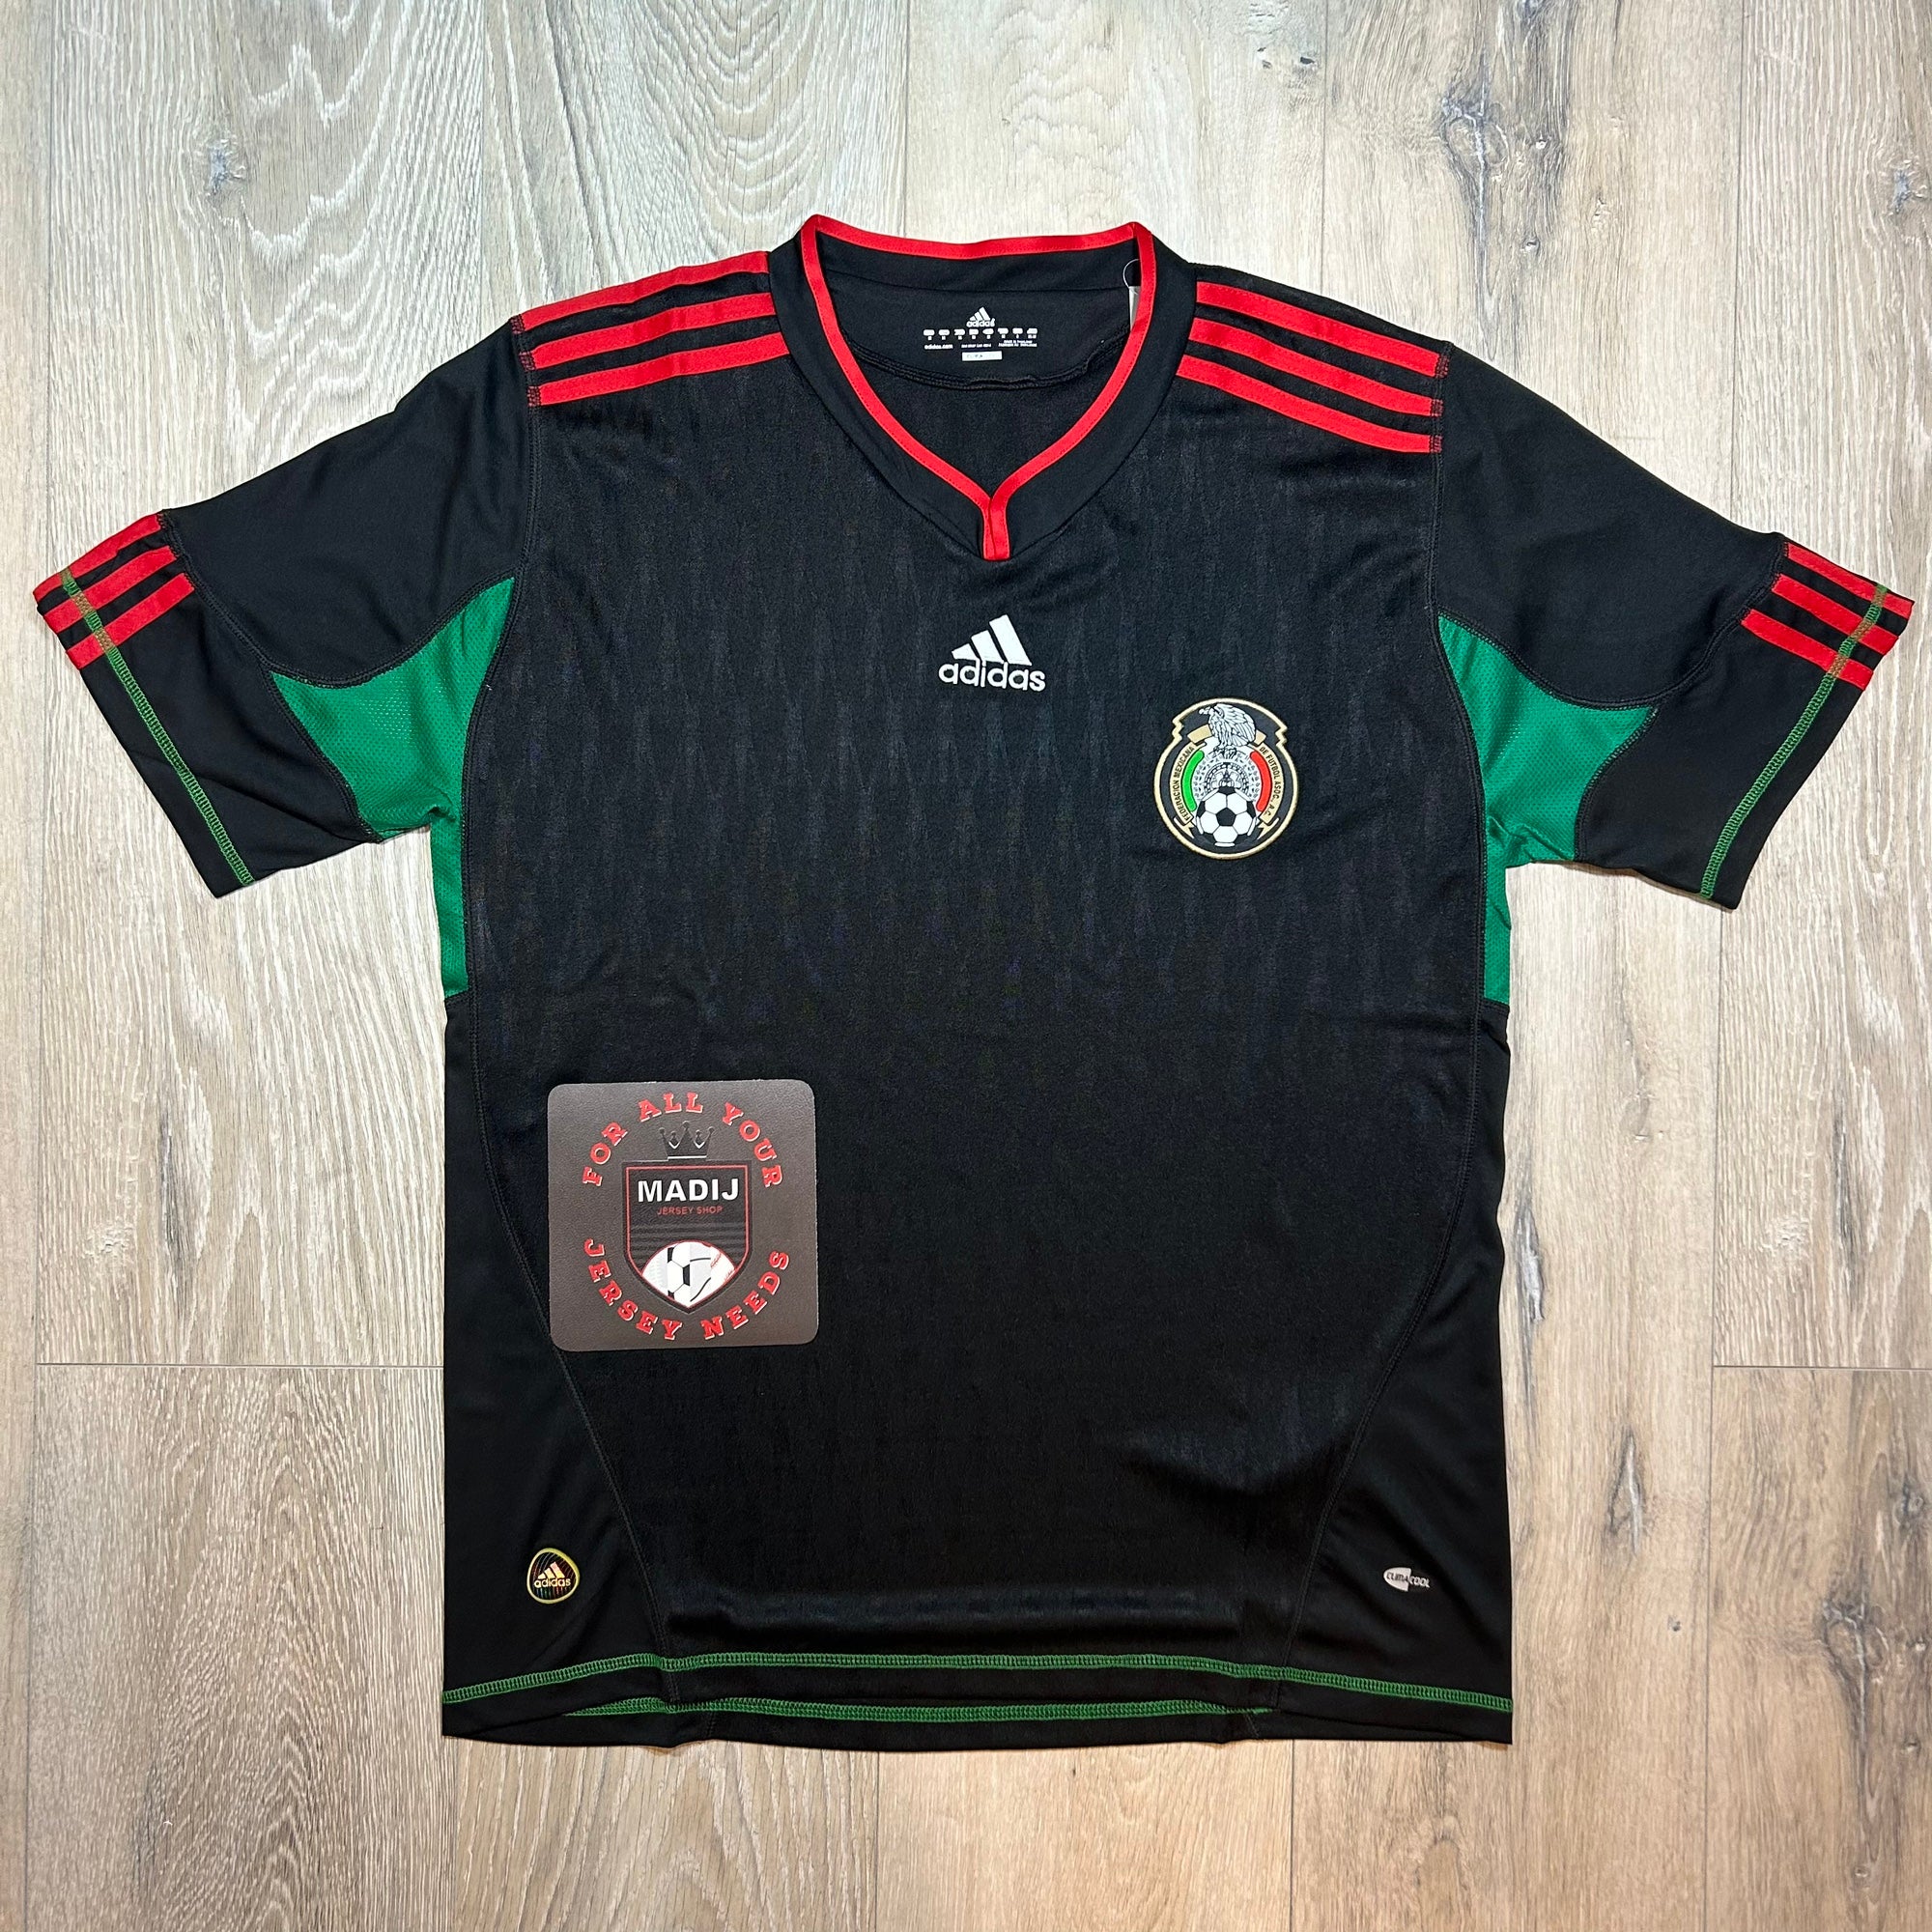 2010 black mexico jersey